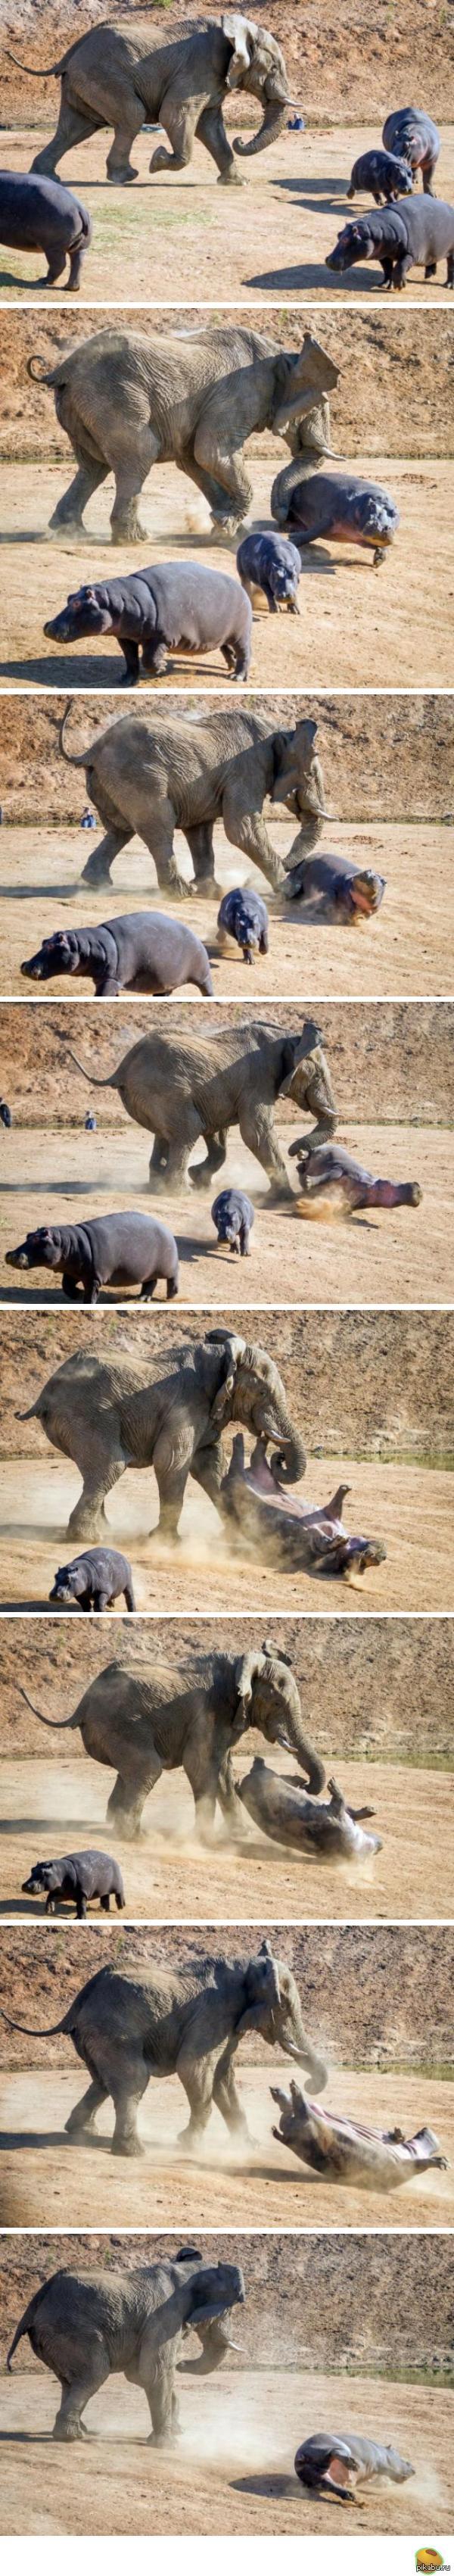 Hippo vs Elephant - Elephants, hippopotamus, Skirmish, Longpost